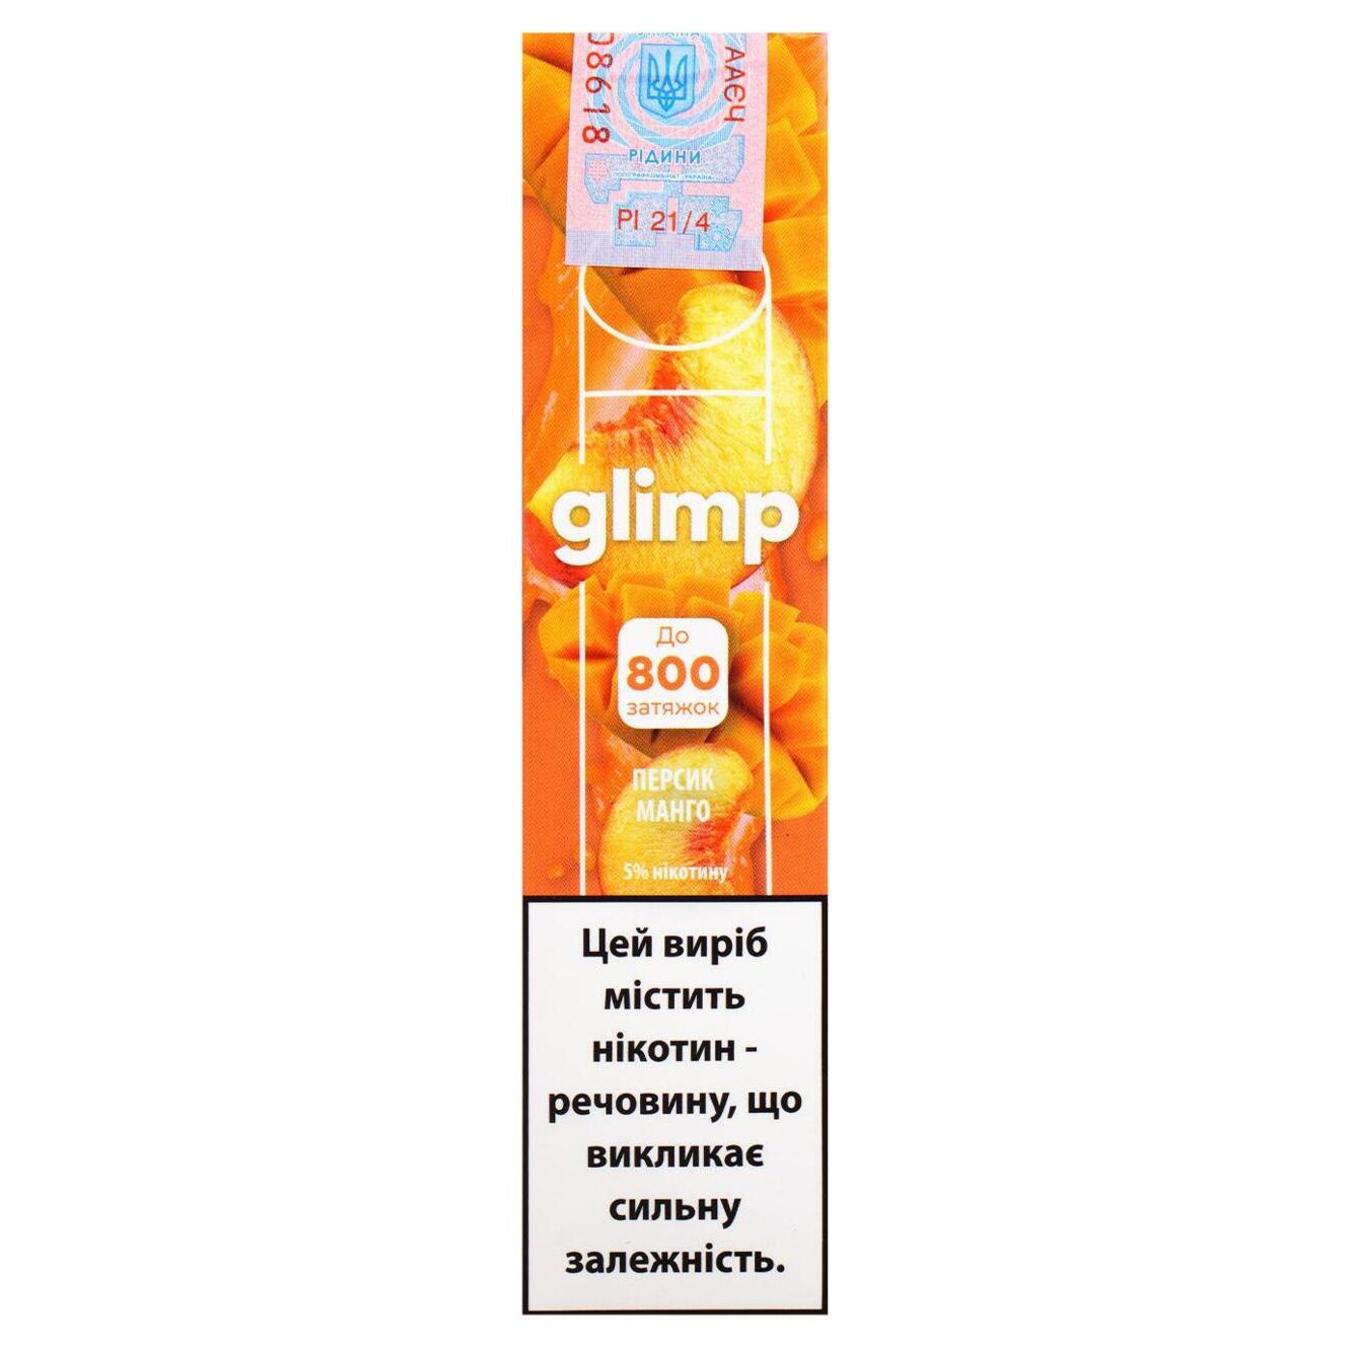 Испаритель со вкусом Персик манго GLIMP 800 5% 2мл (цена указана без акциза)